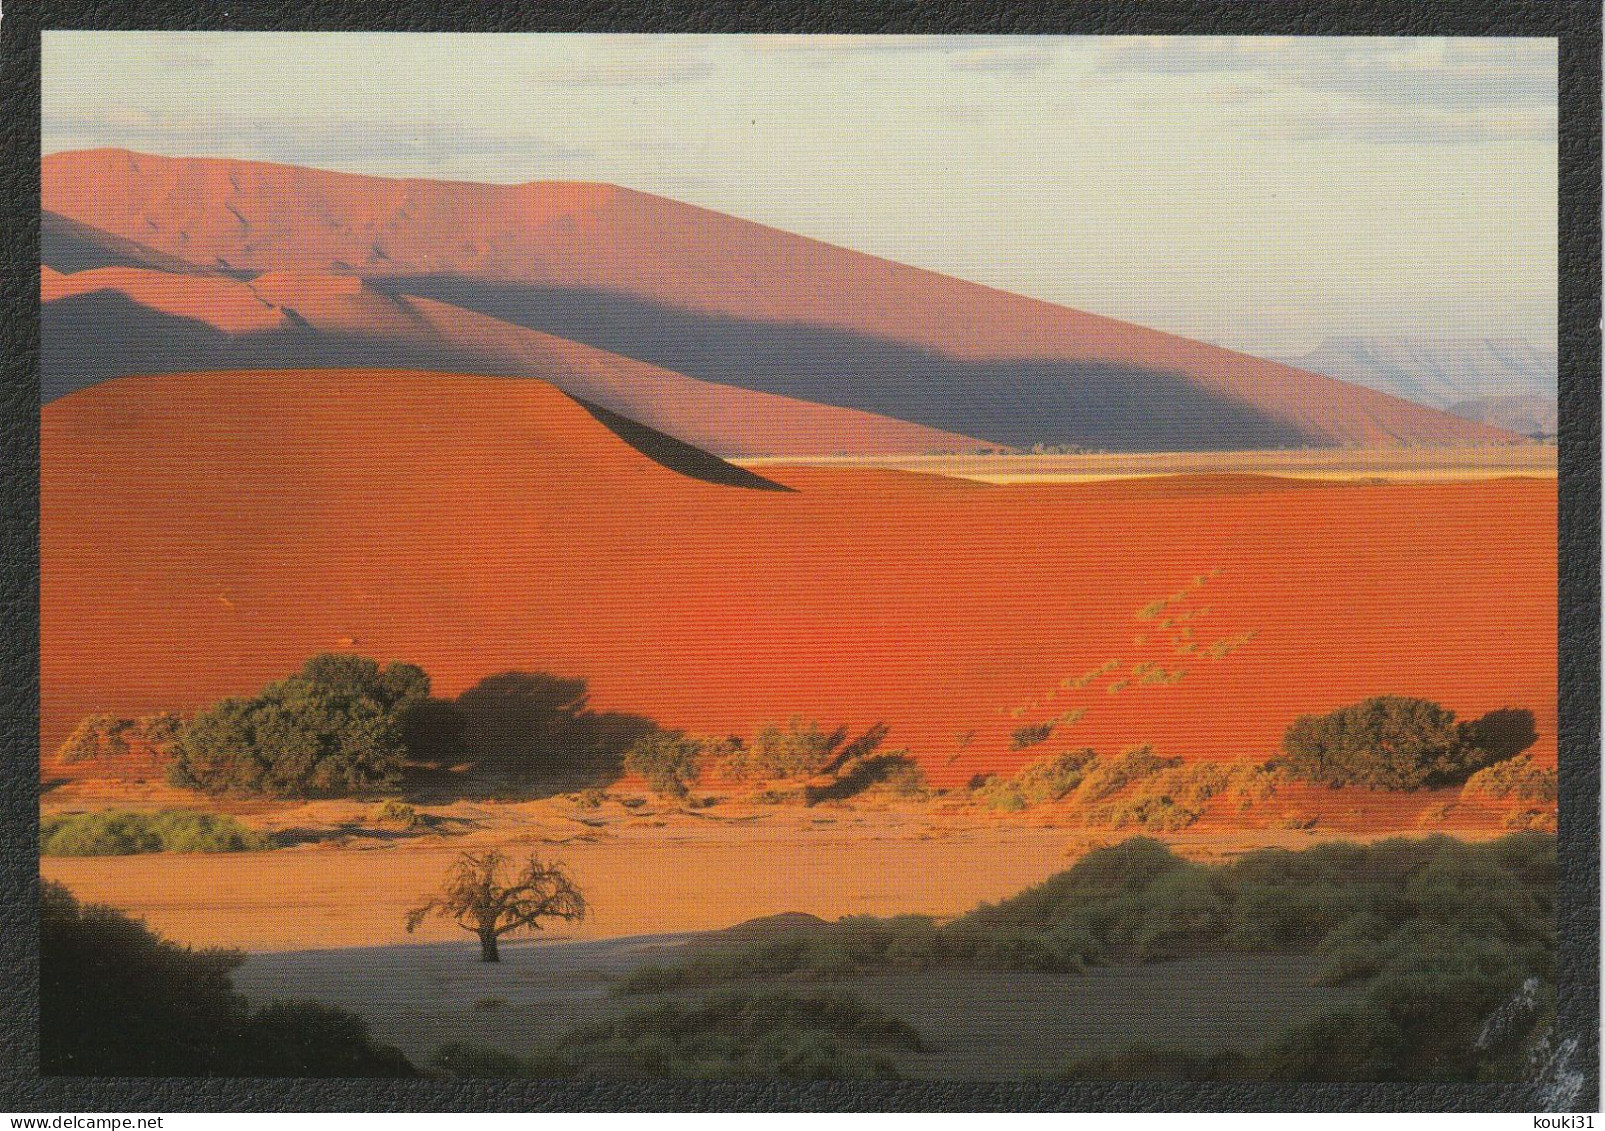 Dunes De Sossuvlei - Namibie